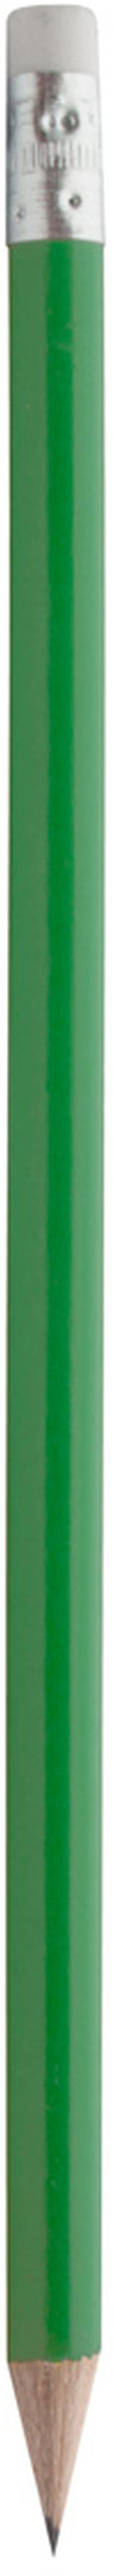 Zelená tužka s gumou na konci